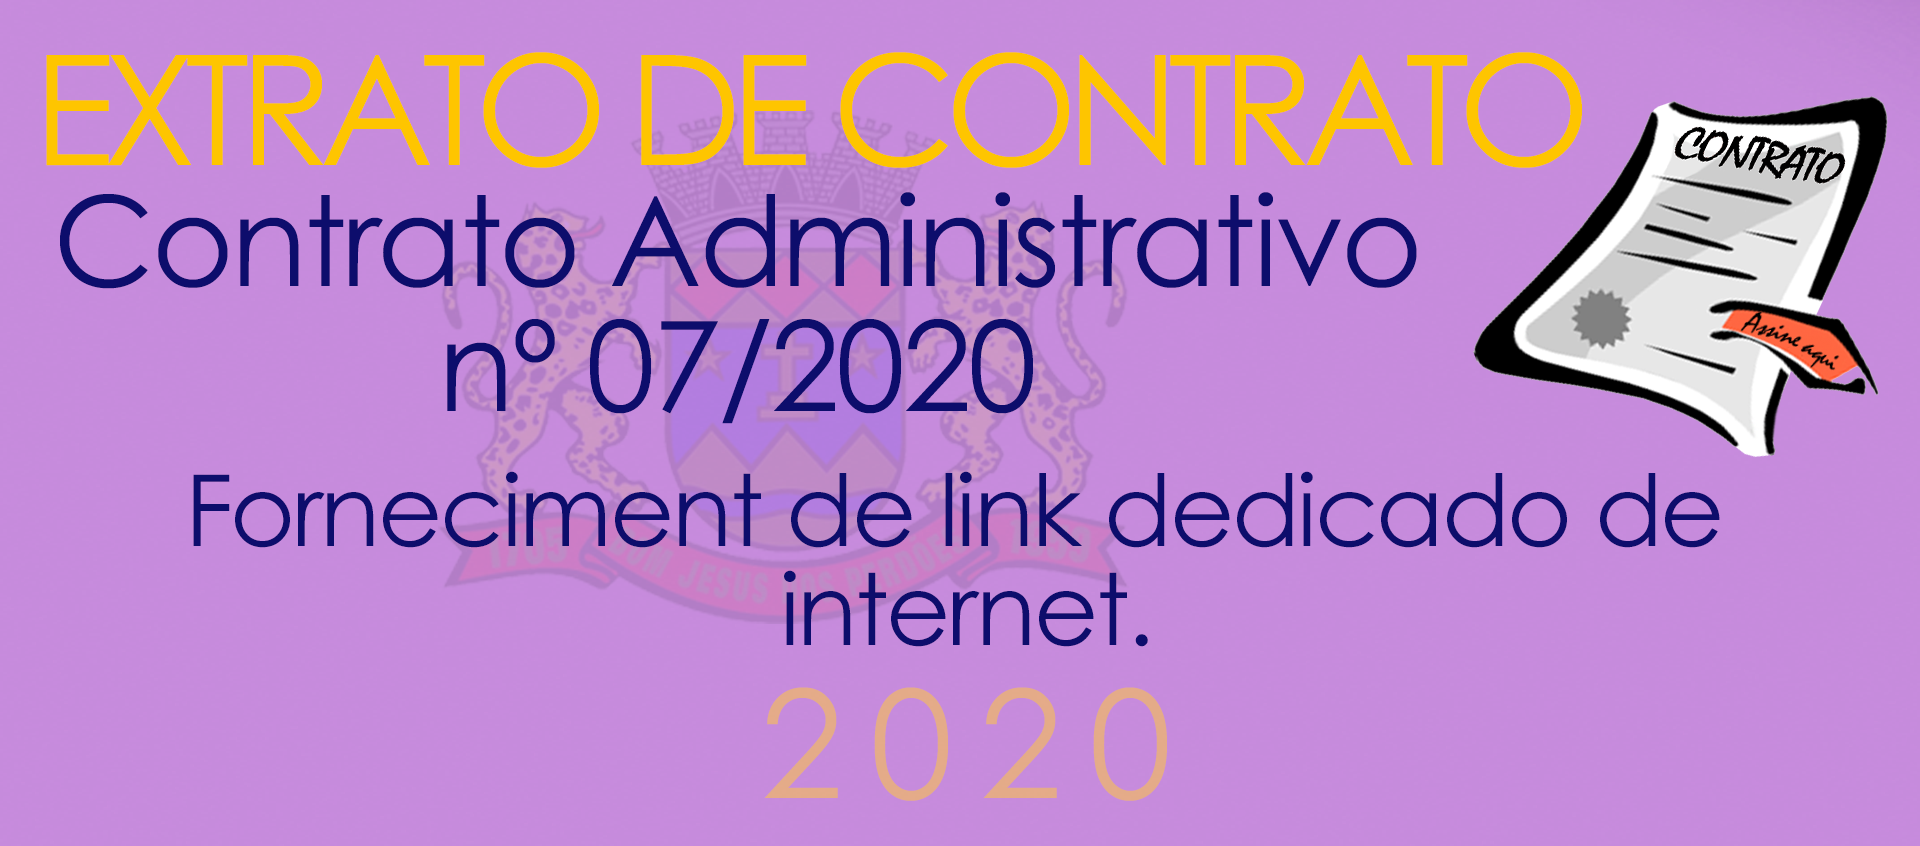 Extrato de Contrato Administrativo nº 07/2020